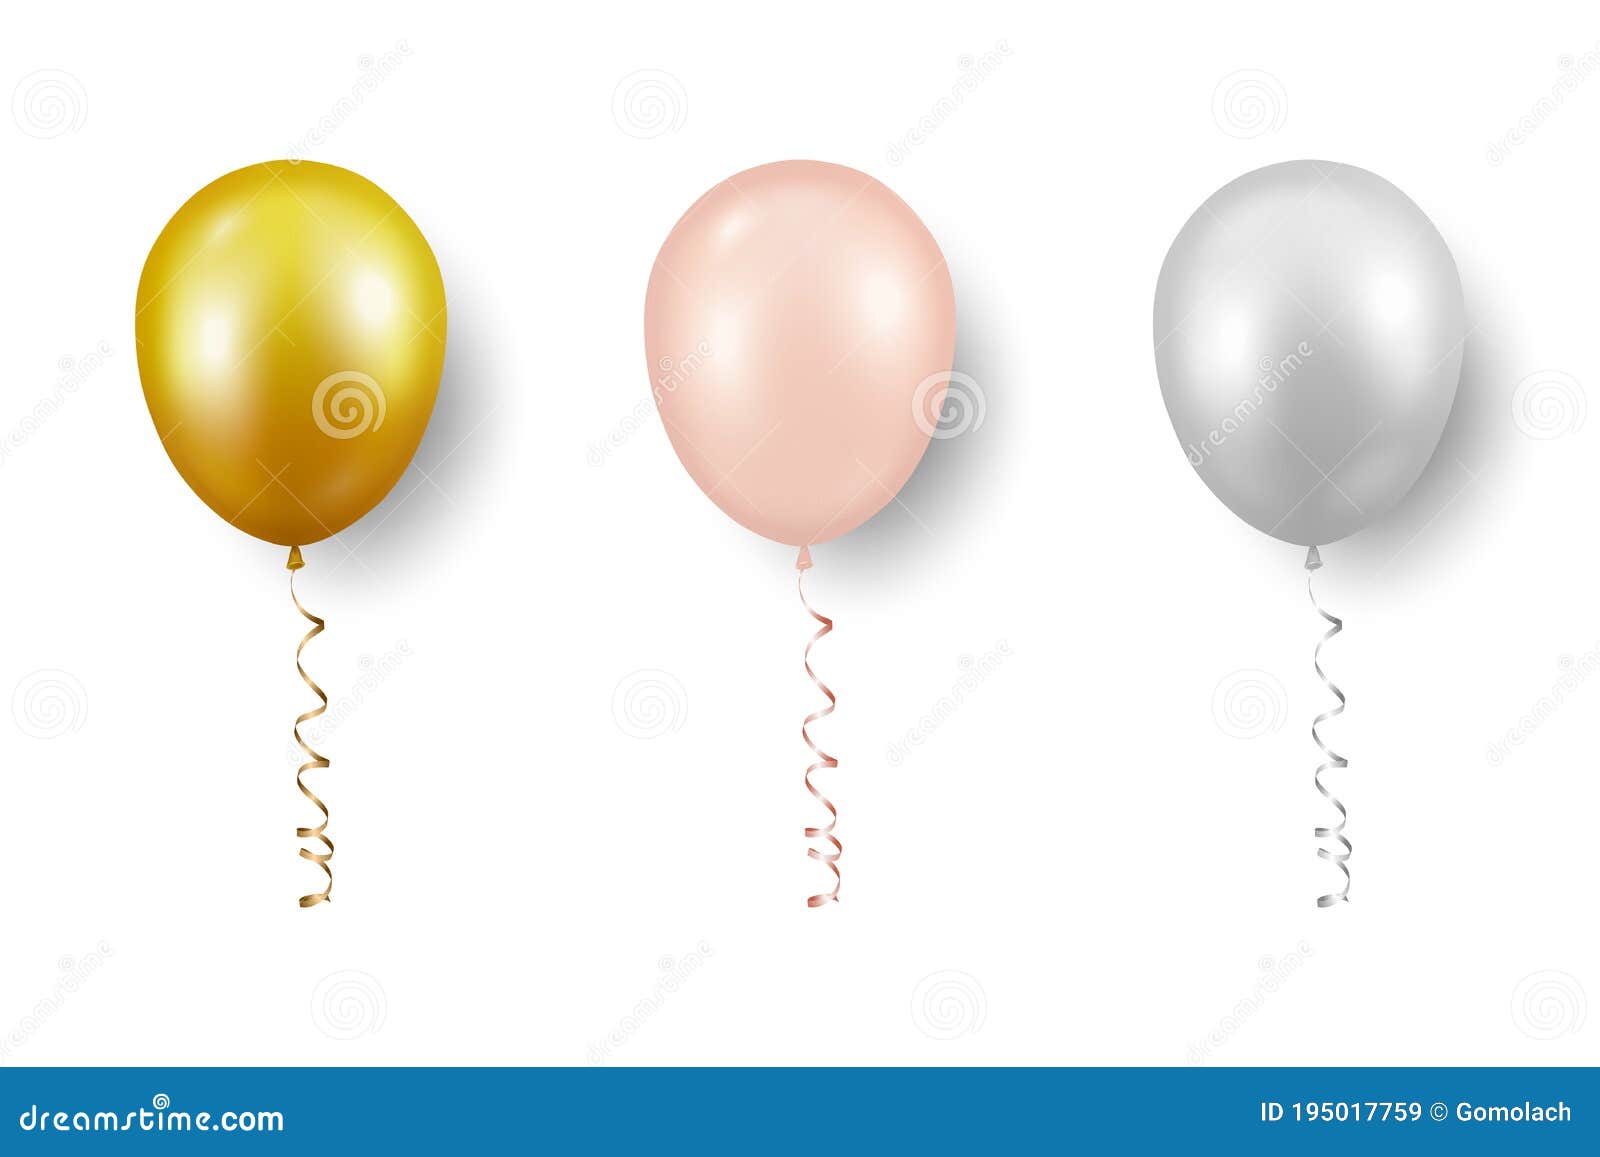 Foil BALLOON TURTLE ANIMAL continuously Helium Balloon Air Balloon Kids Birthday